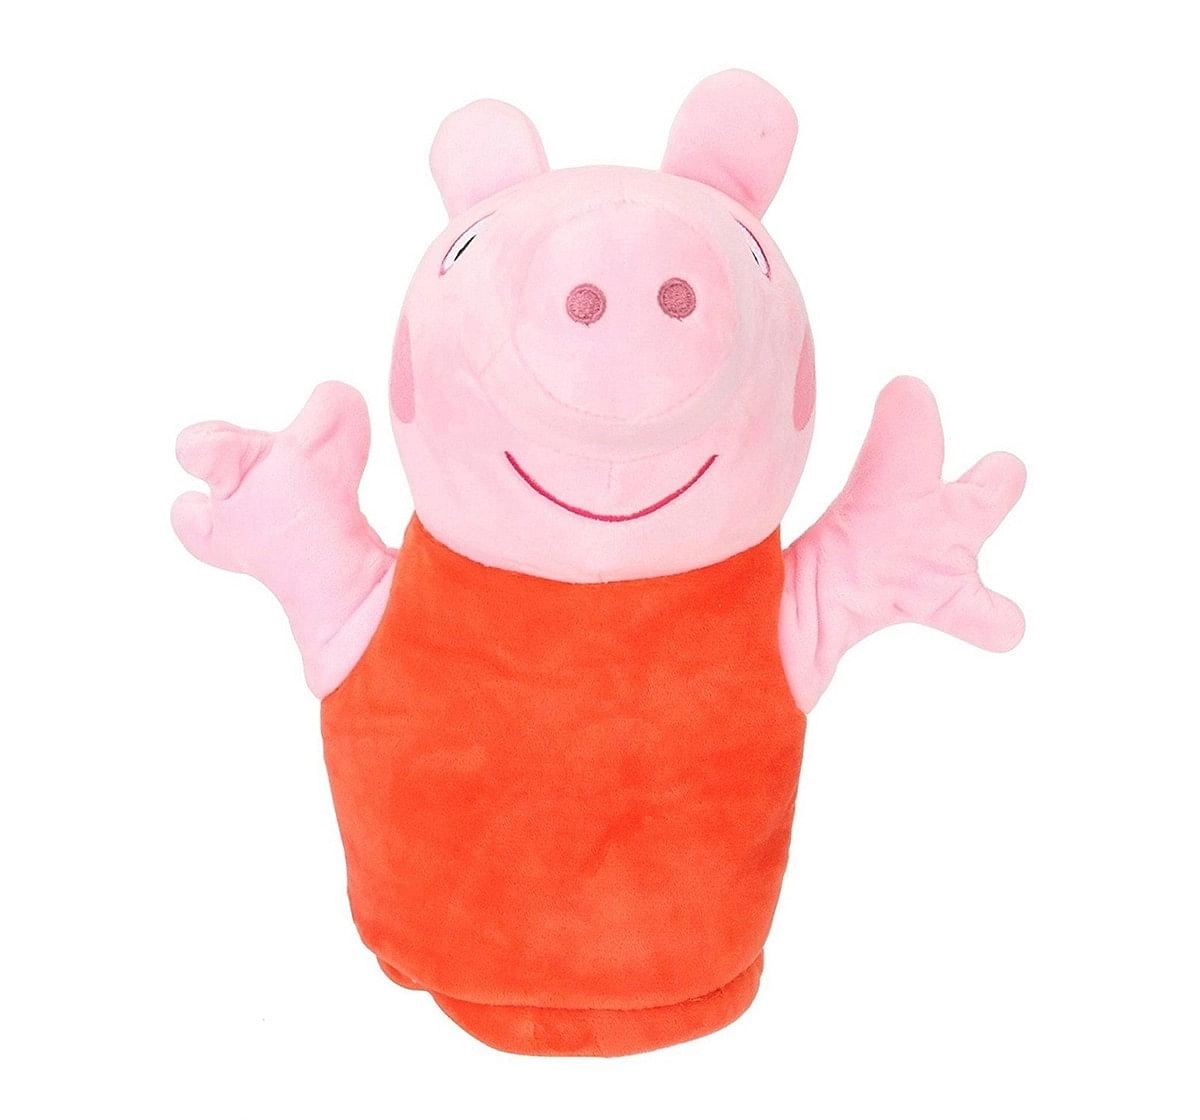 Peppa Pig George 26 Cm Soft Toys for Kids age 3Y+ (Orange)